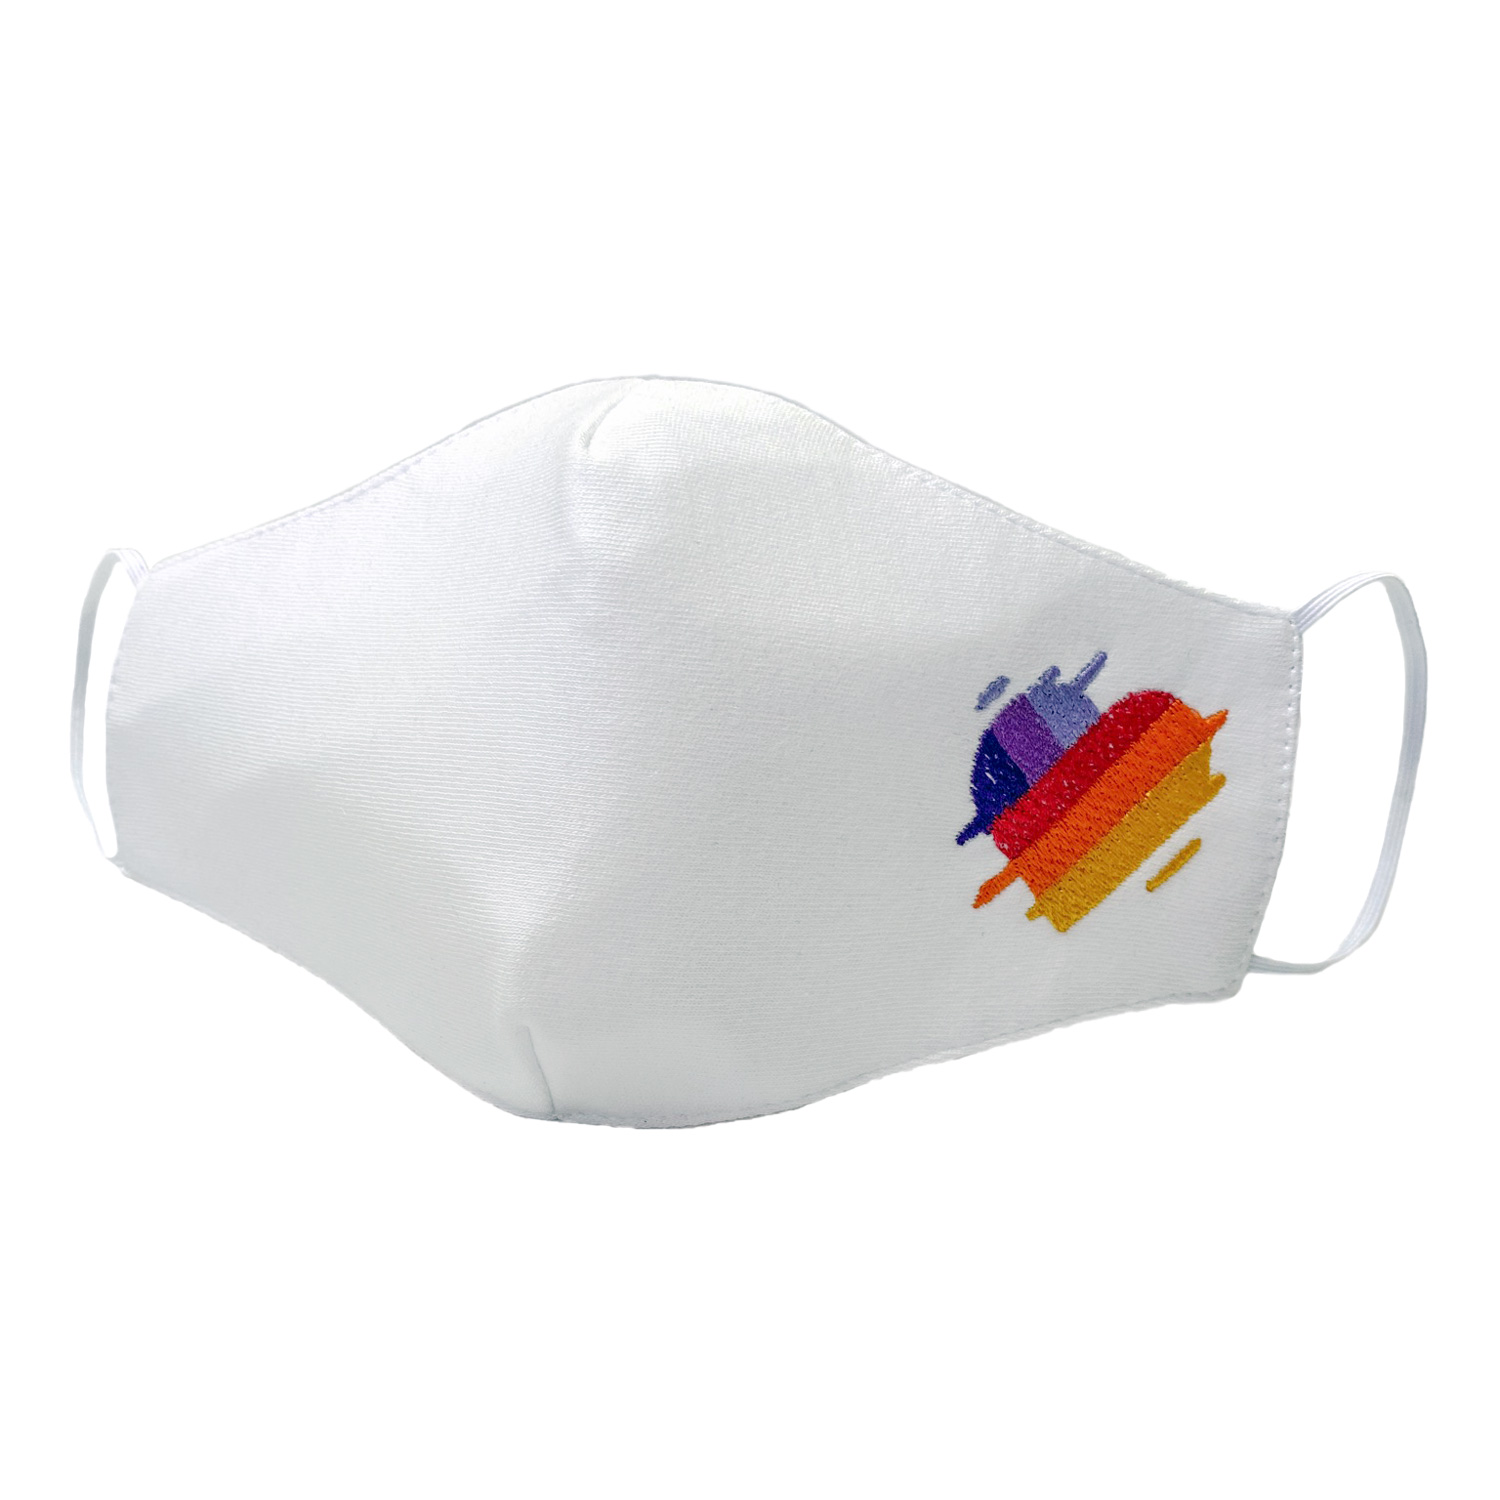 Подростковая защитная маска для лица "Like" белая